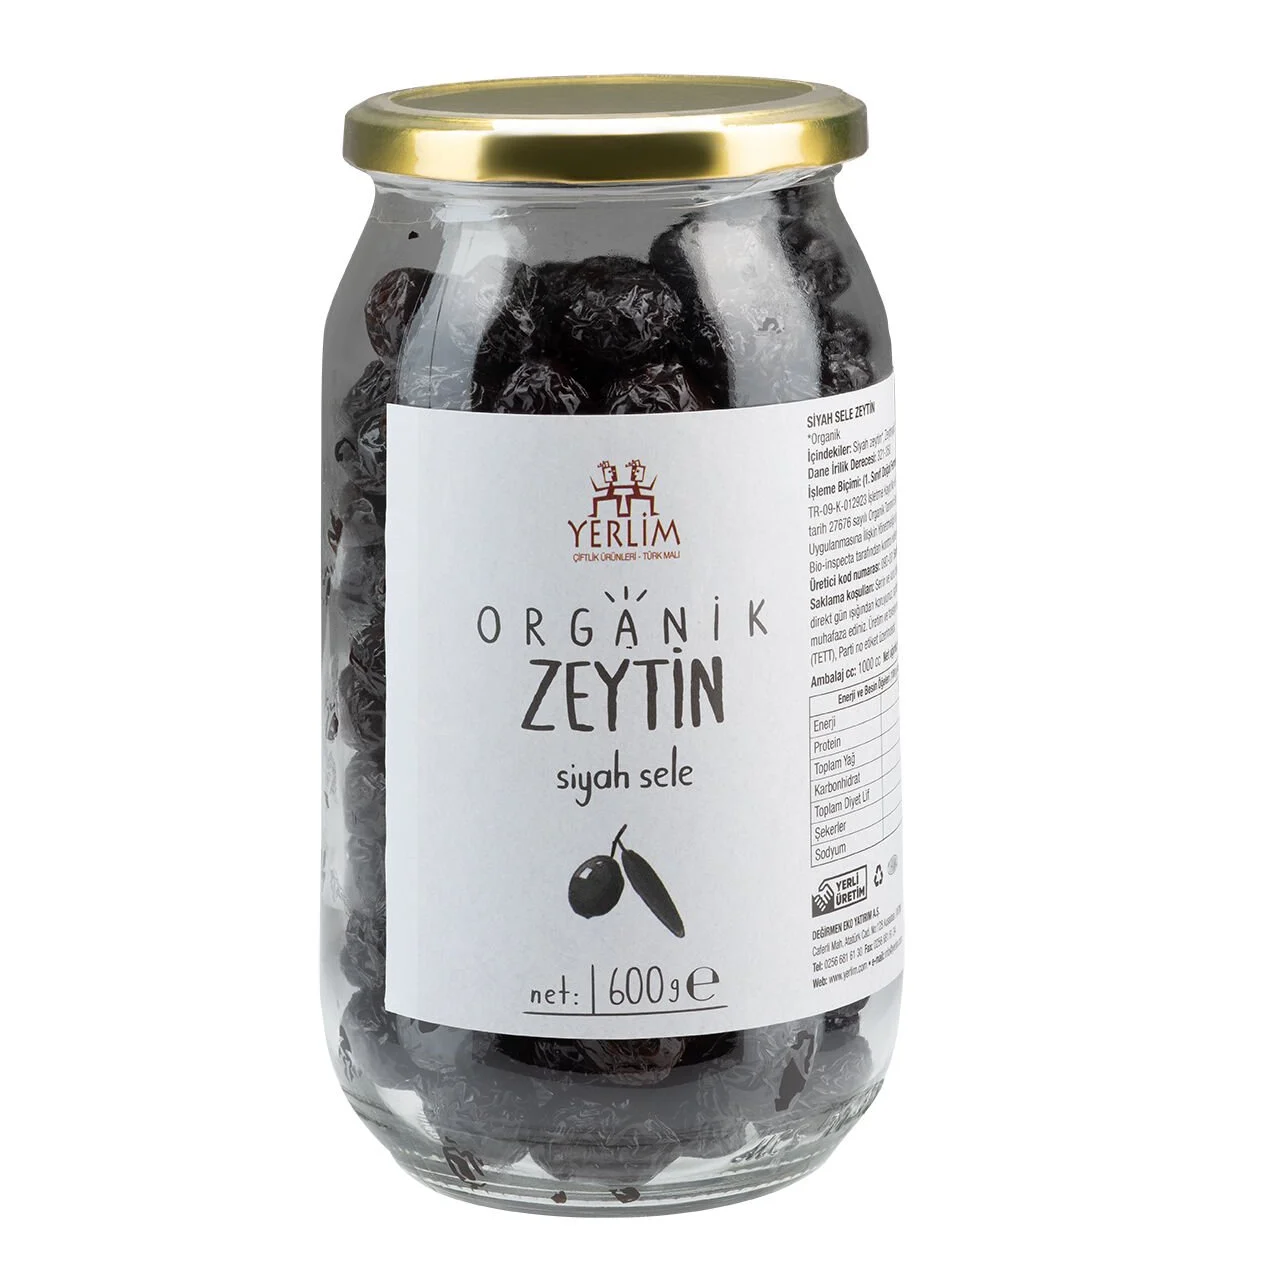 Yerlim Organik Zeytin - Siyah Sele ( 600 g )